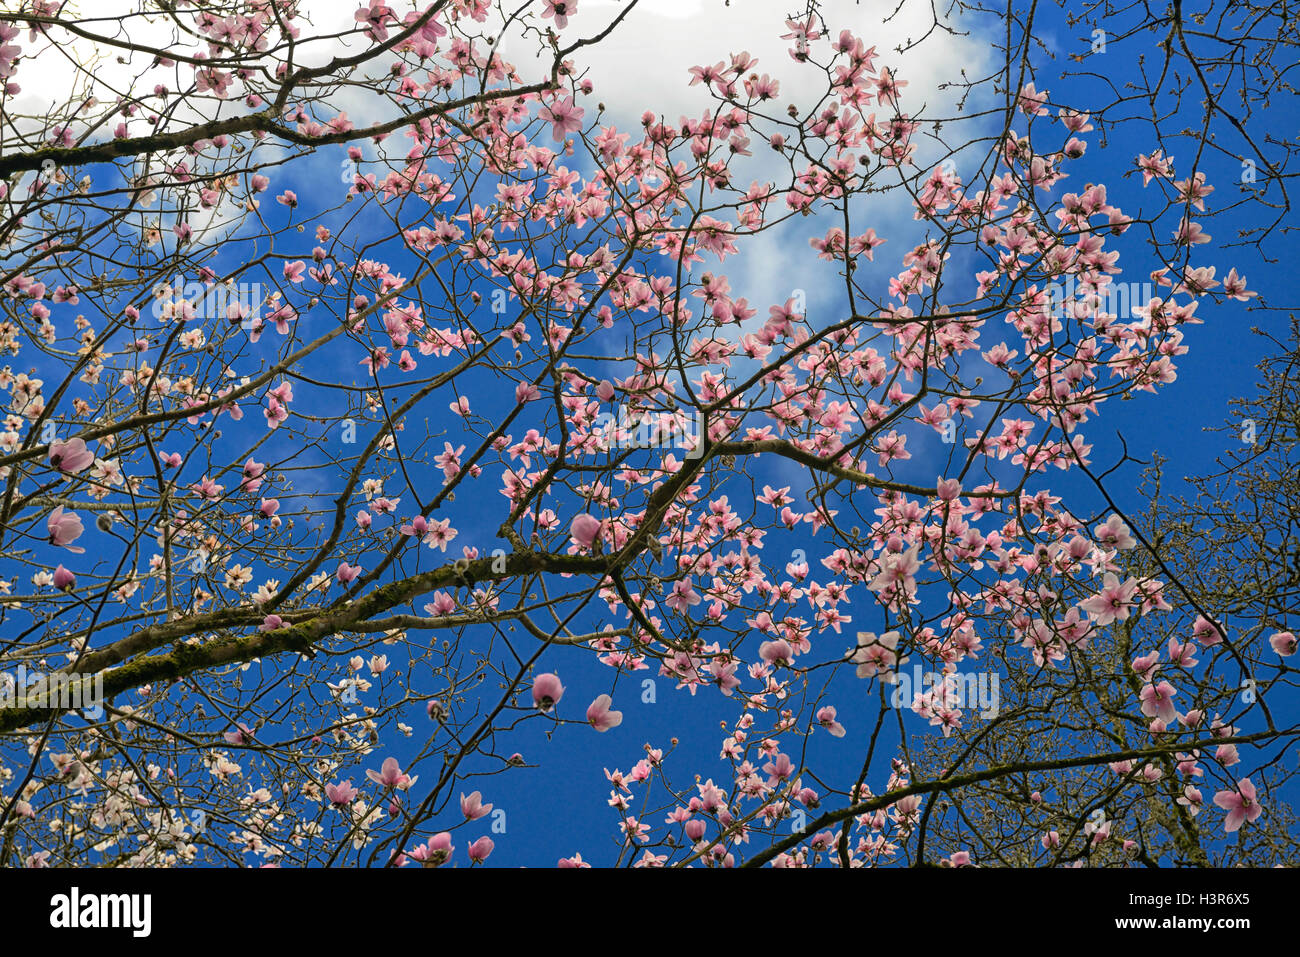 Magnolia campbellii fiori rosa alberi fioriti albero canopy tettoie Mount Giardini Congreve Waterford Irlanda floreale RM Foto Stock